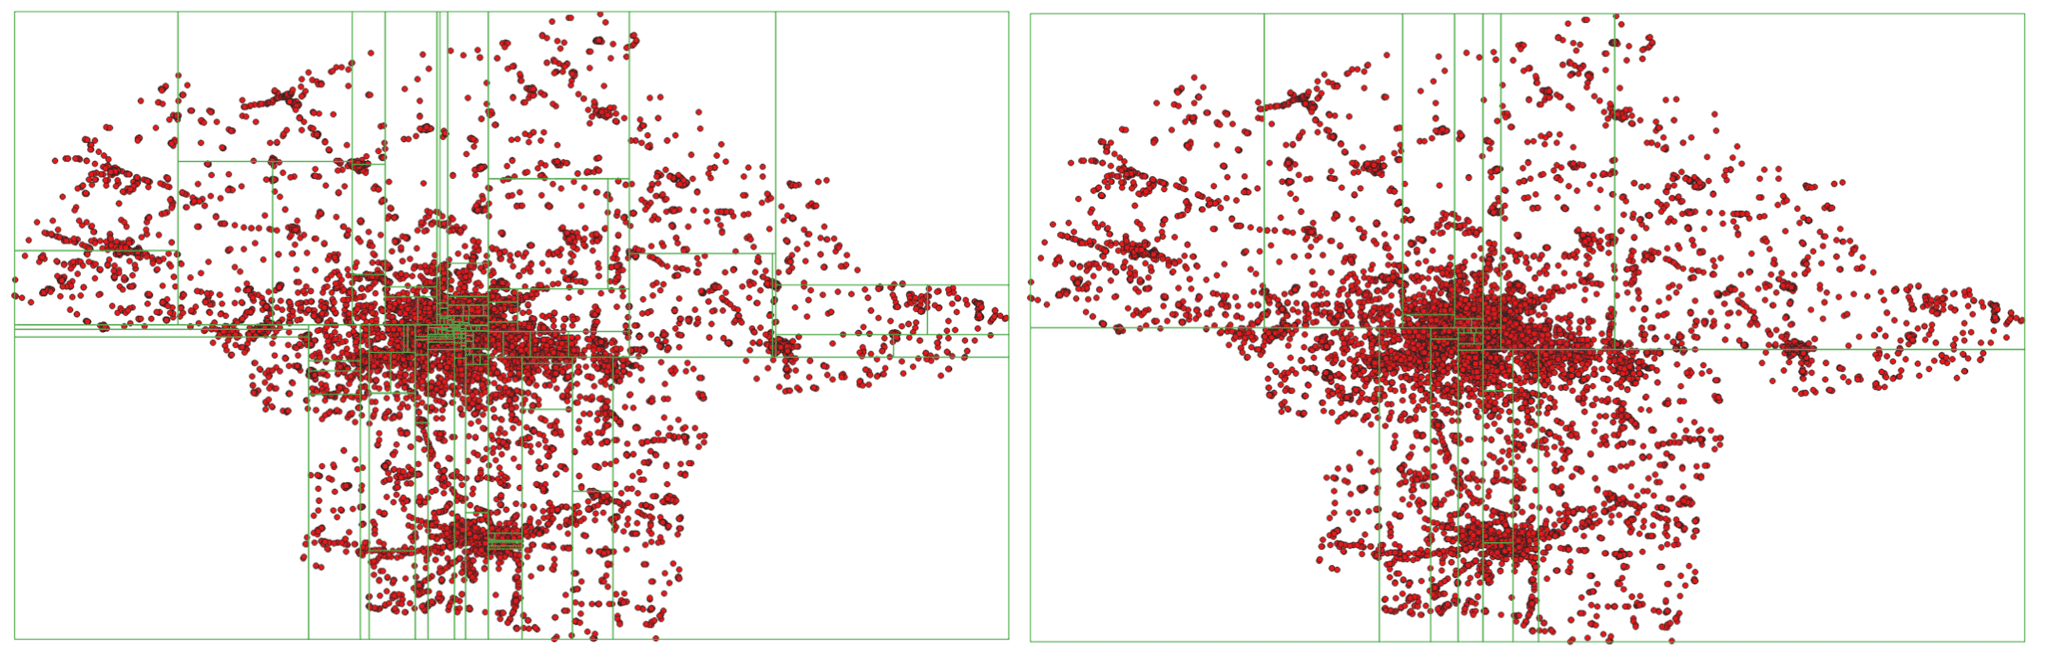 getindata-sedona-tree-spatial-partitioning